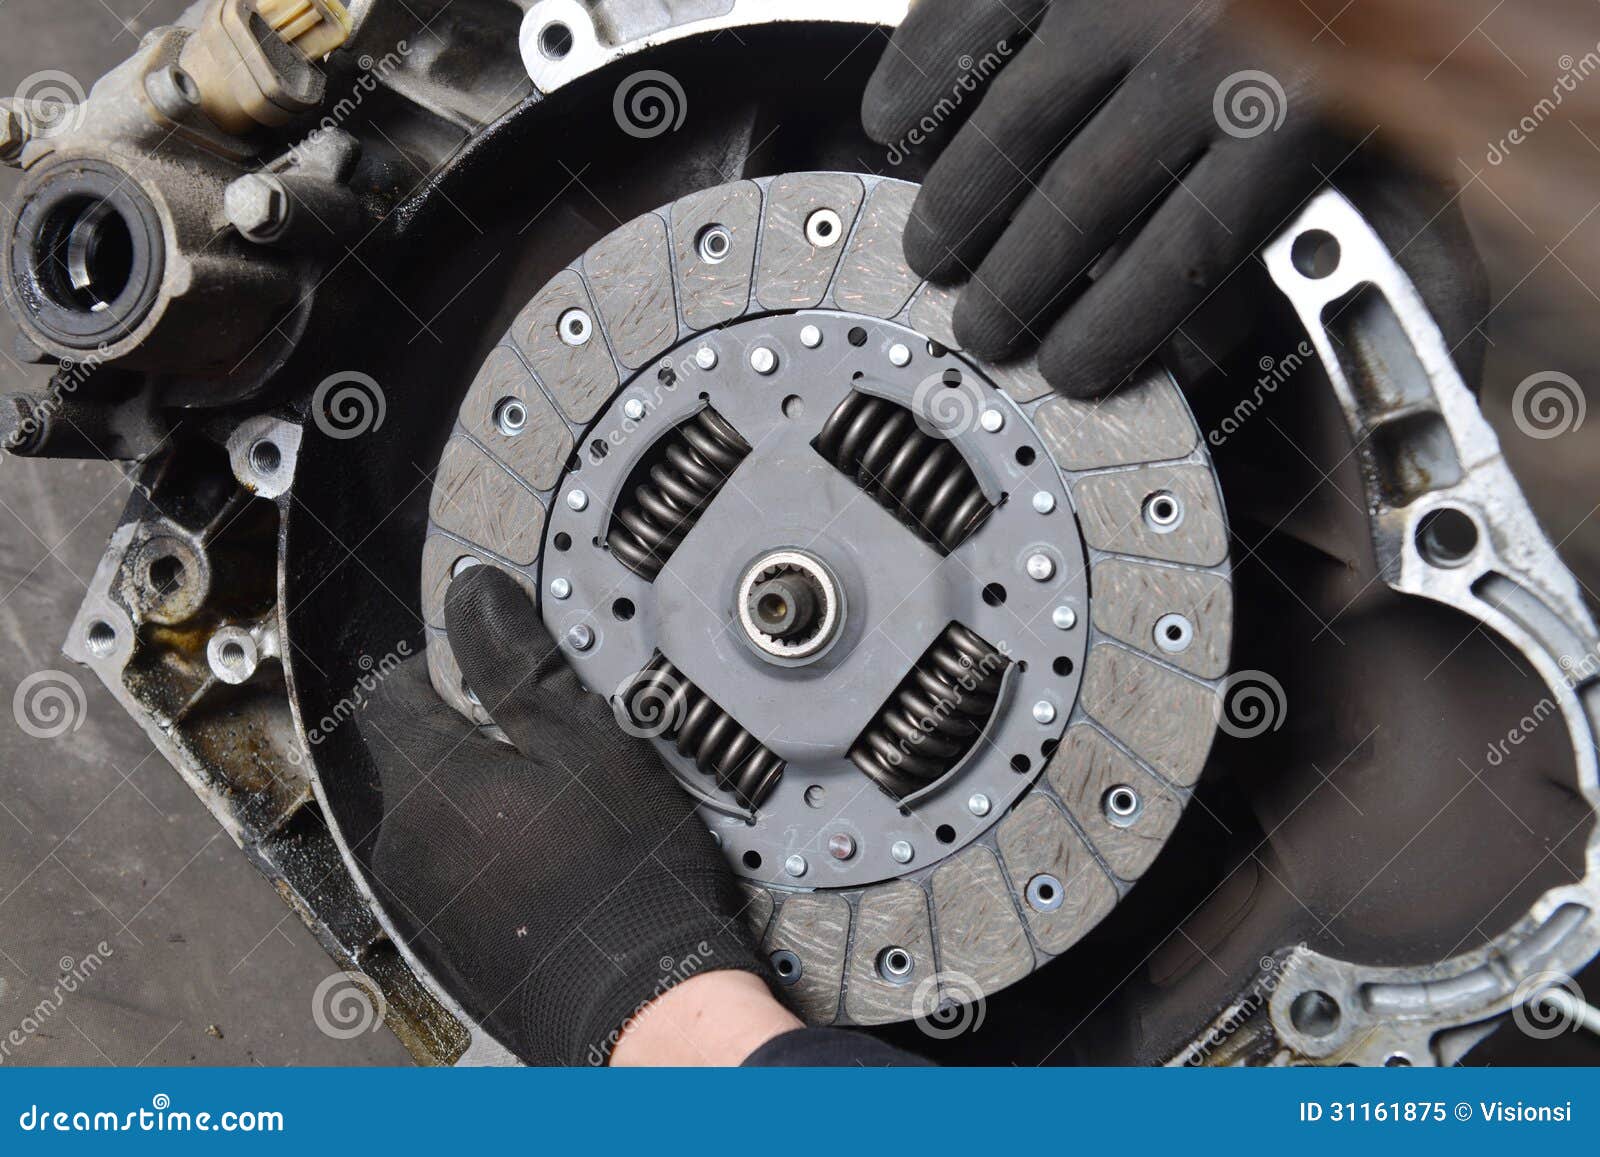 vehicle clutch, car mechanic is changing clutch